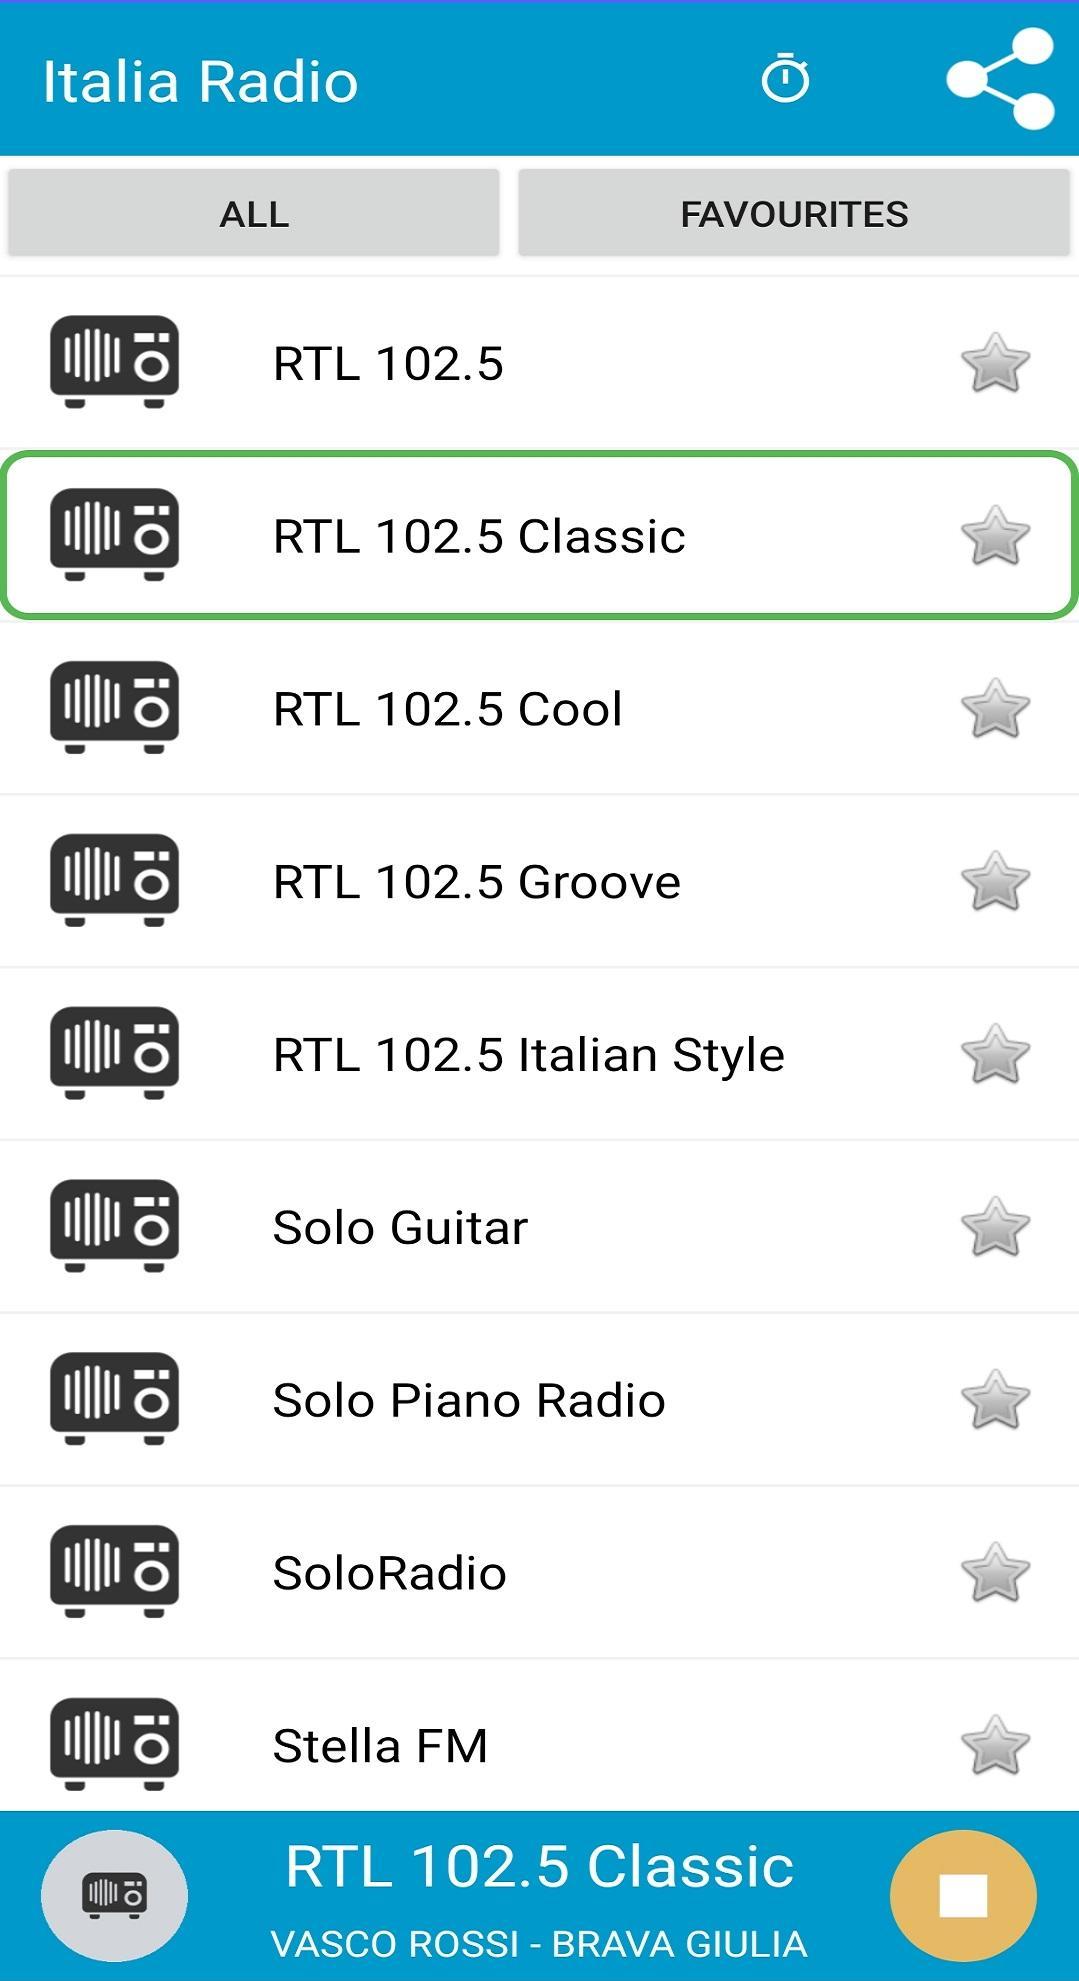 Radio Italia FM AM Online for Android - APK Download